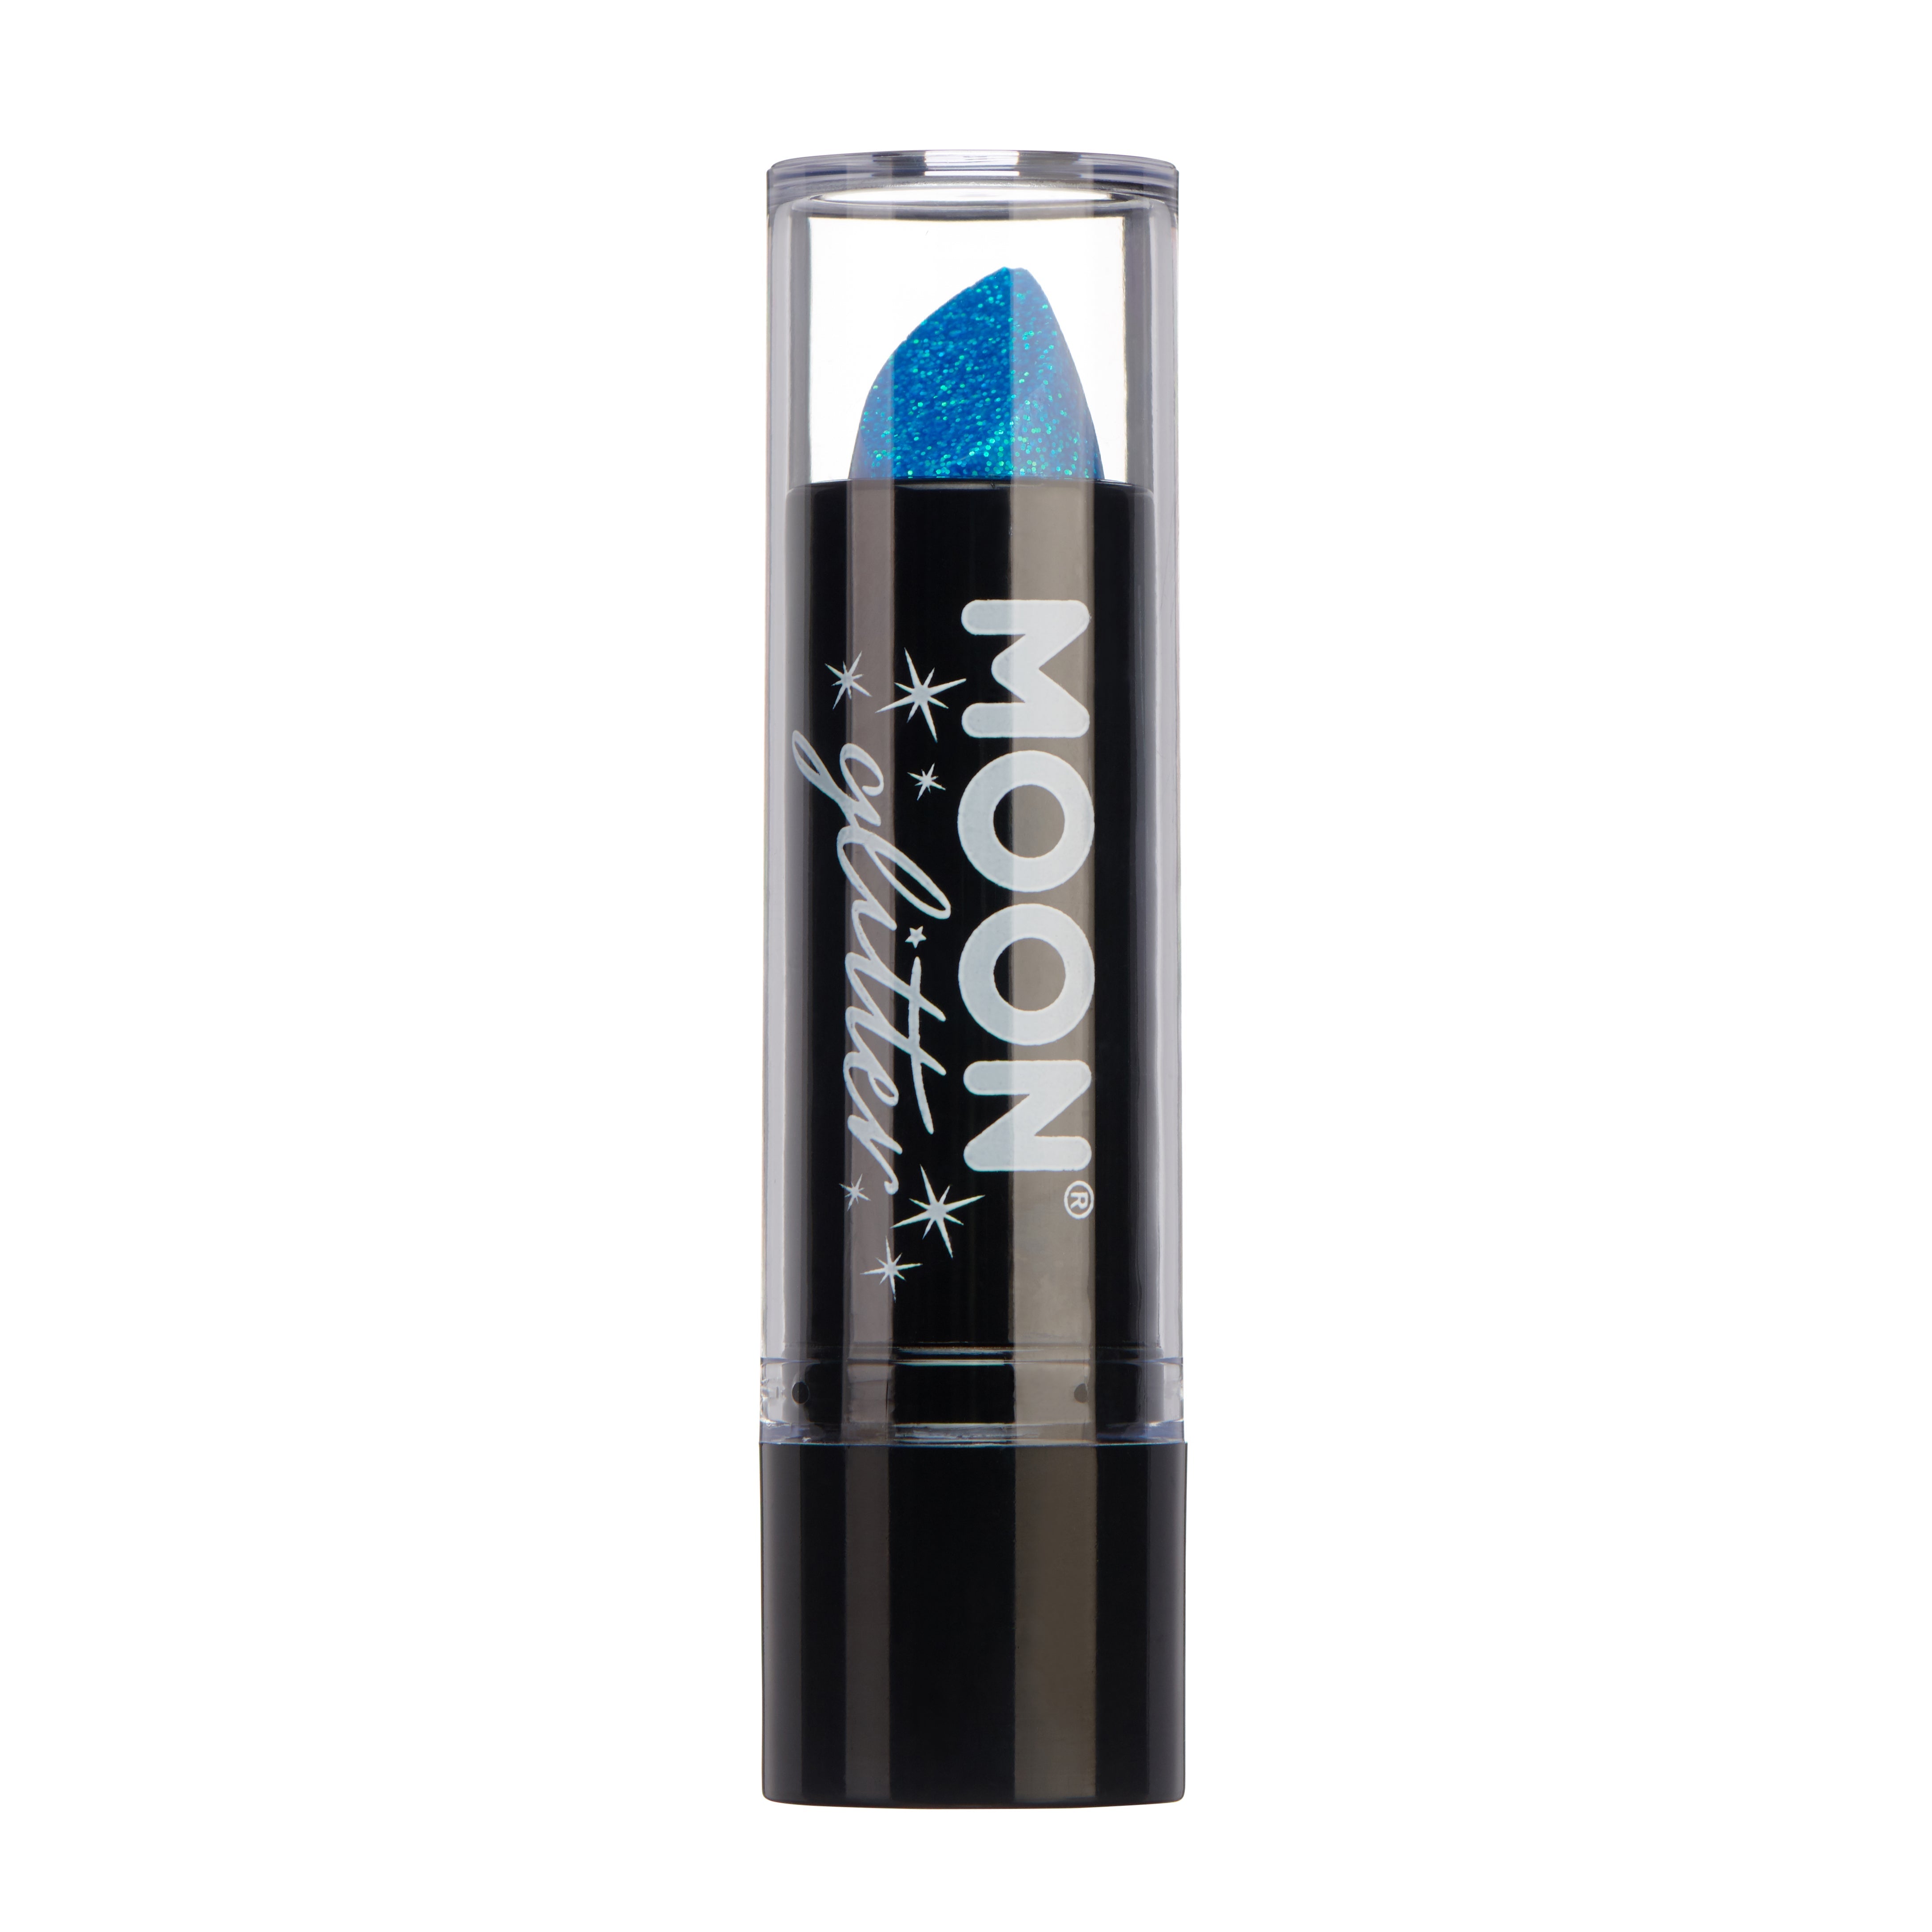 Blue - Iridescent Glitter Lipstick, 5g. Cosmetically certified, FDA & Health Canada compliant and cruelty free.